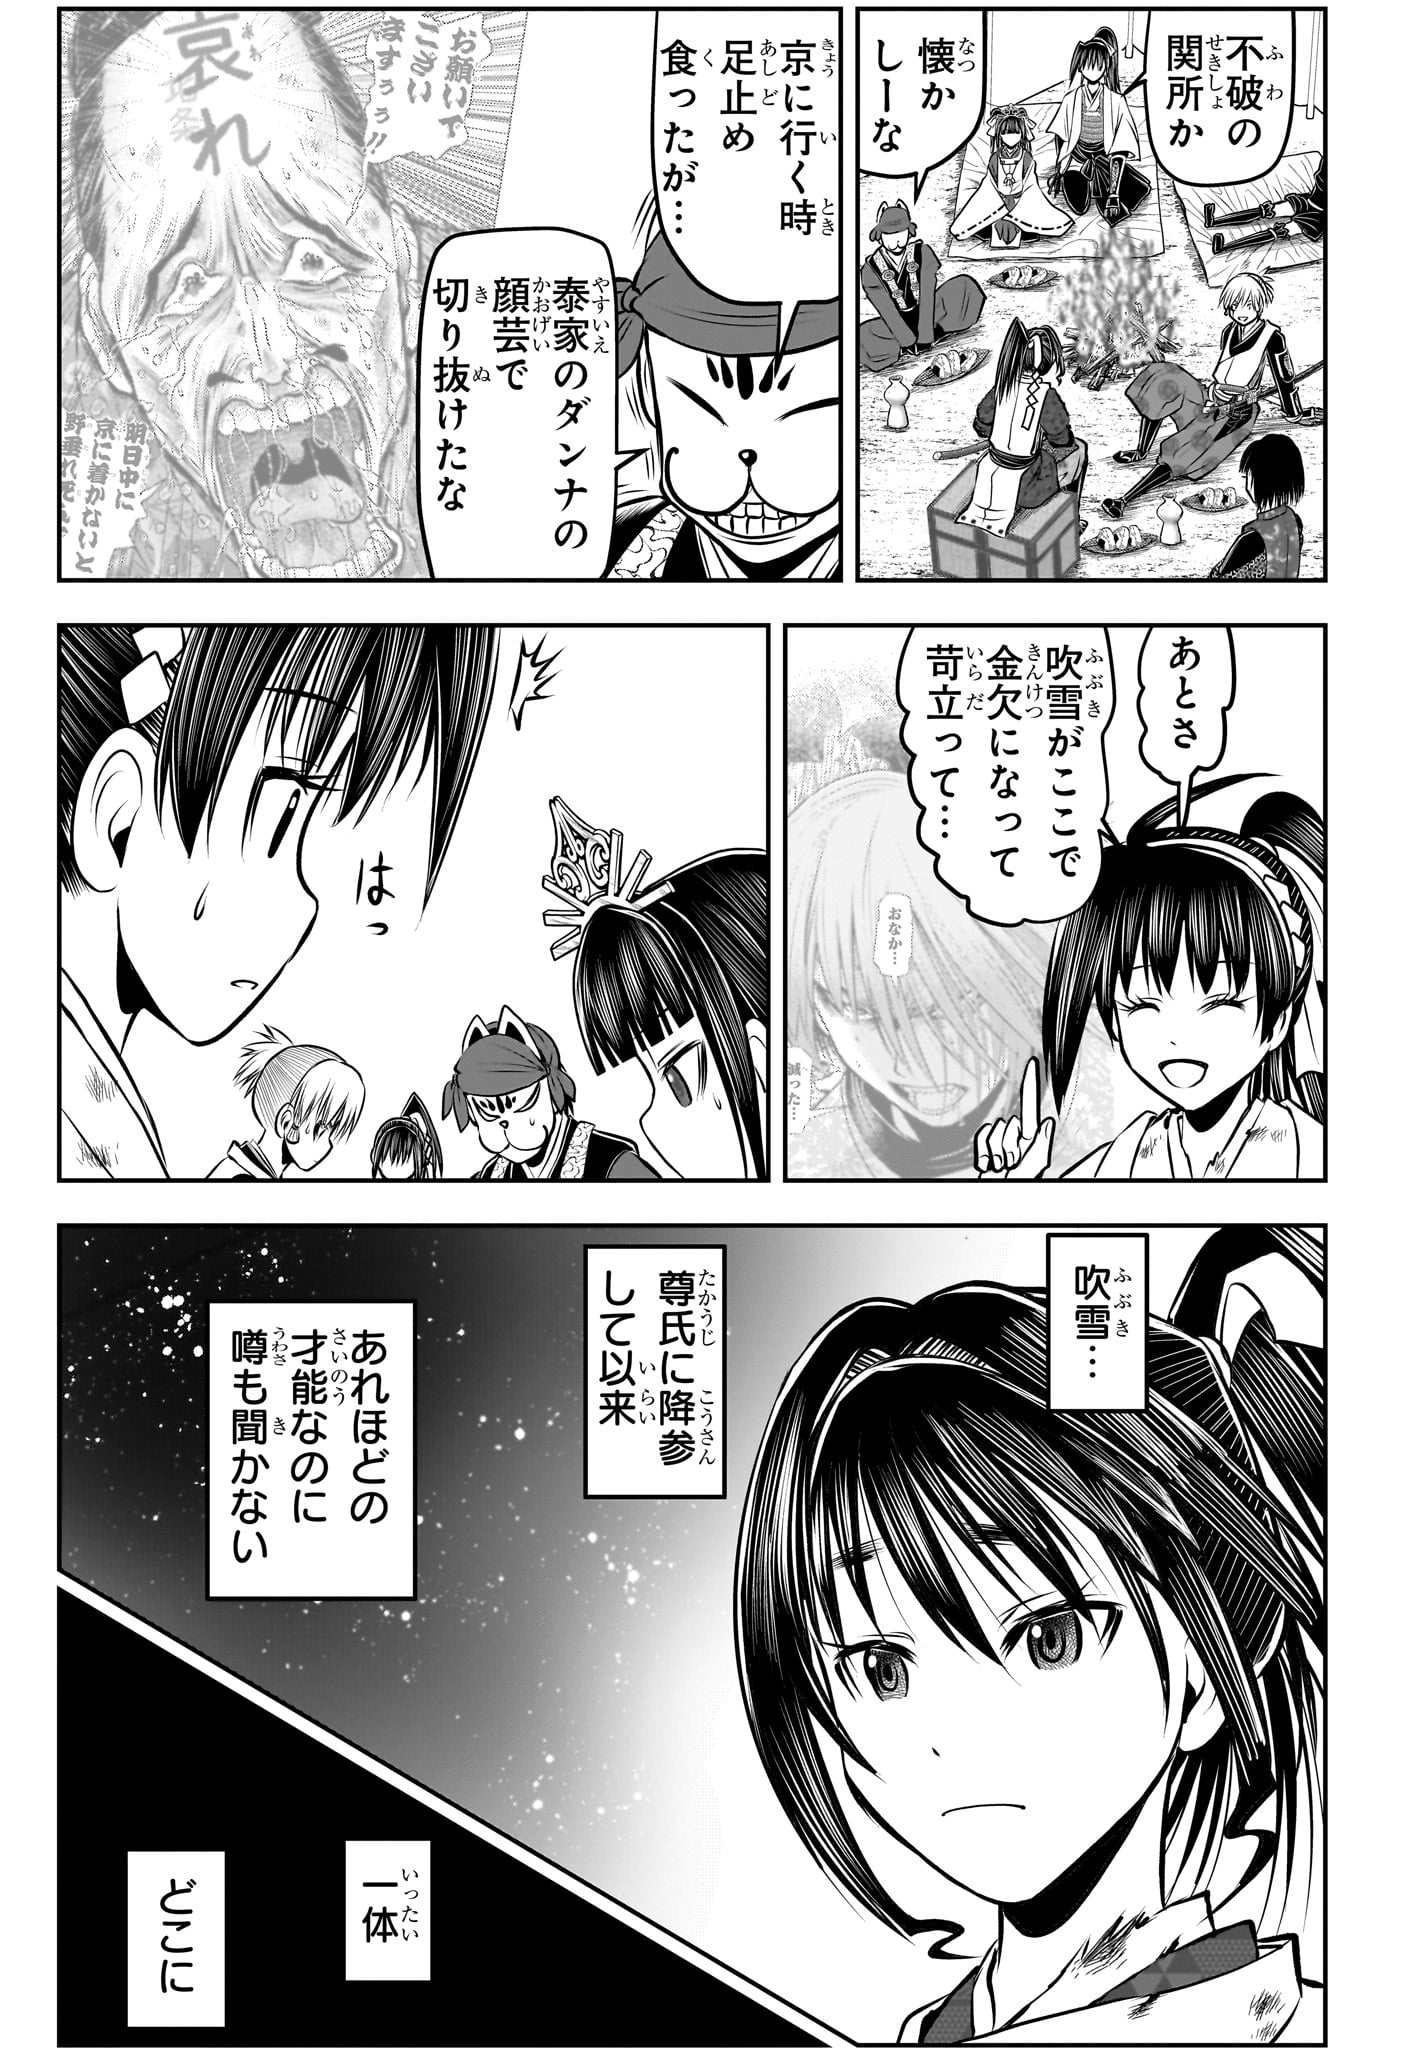 Nige Jouzu no Wakagimi - Chapter 146 - Page 3